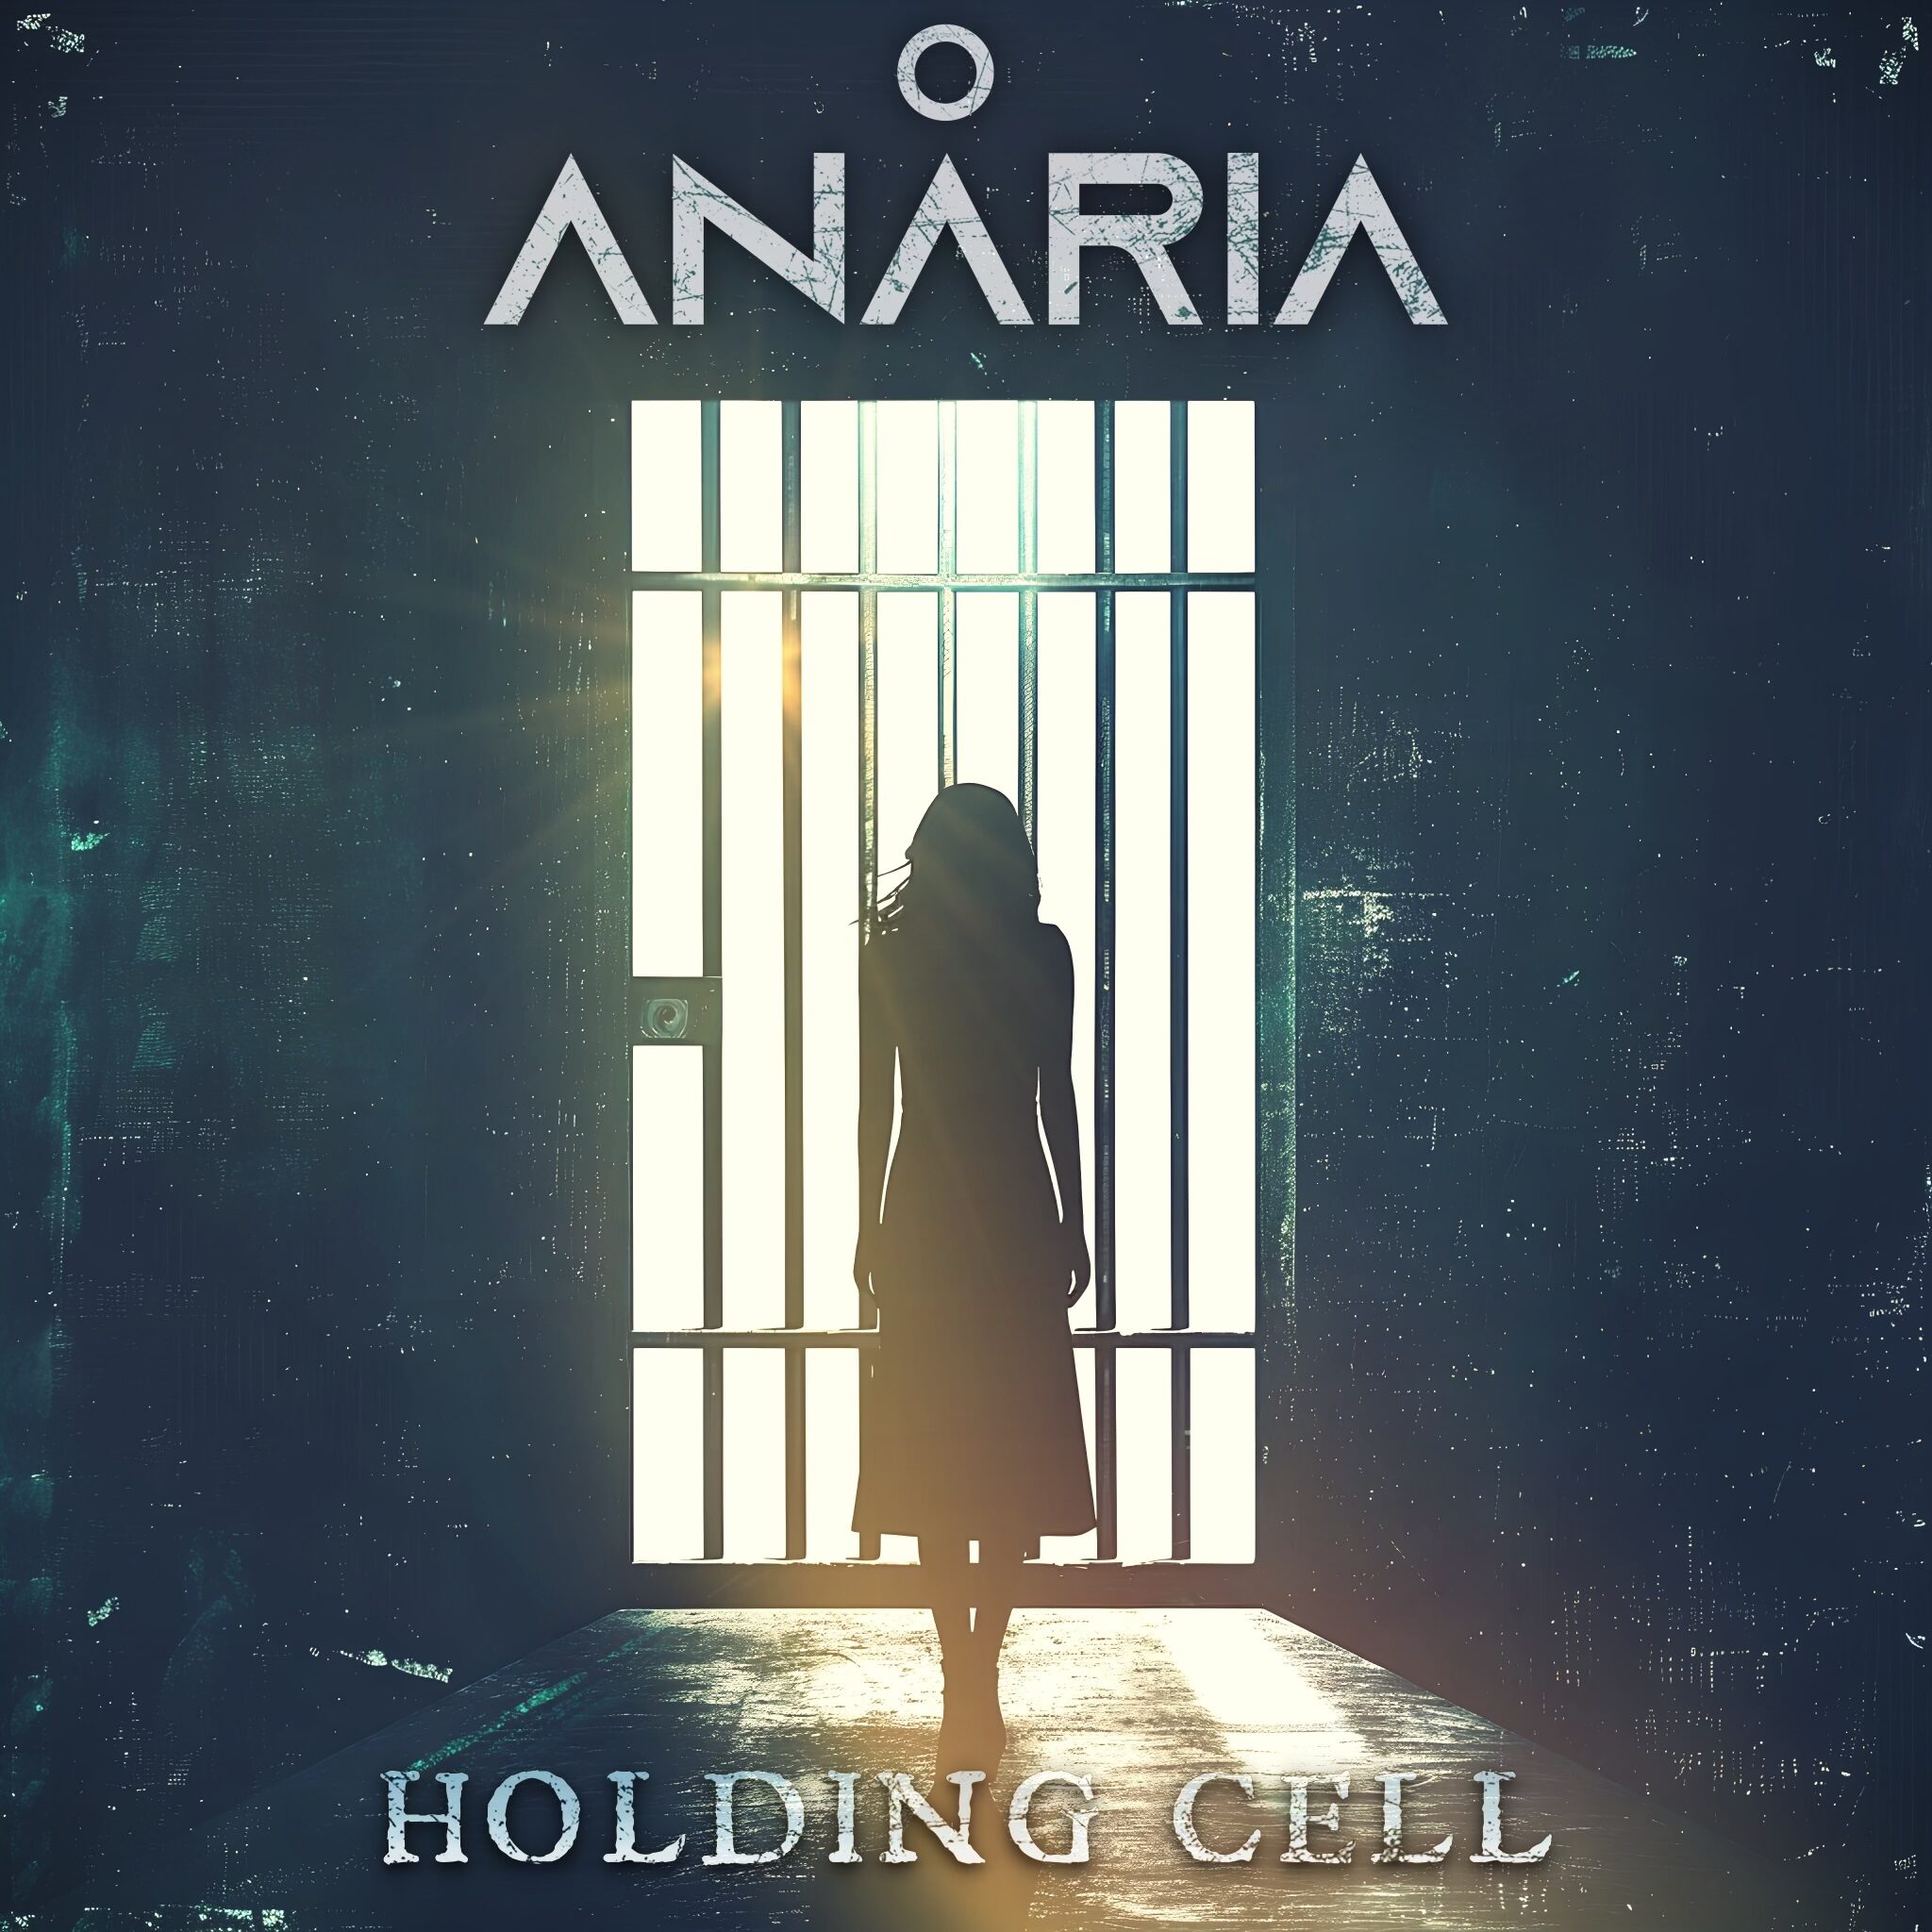 Anaria Holding Cell Album Art Streaming & Socials